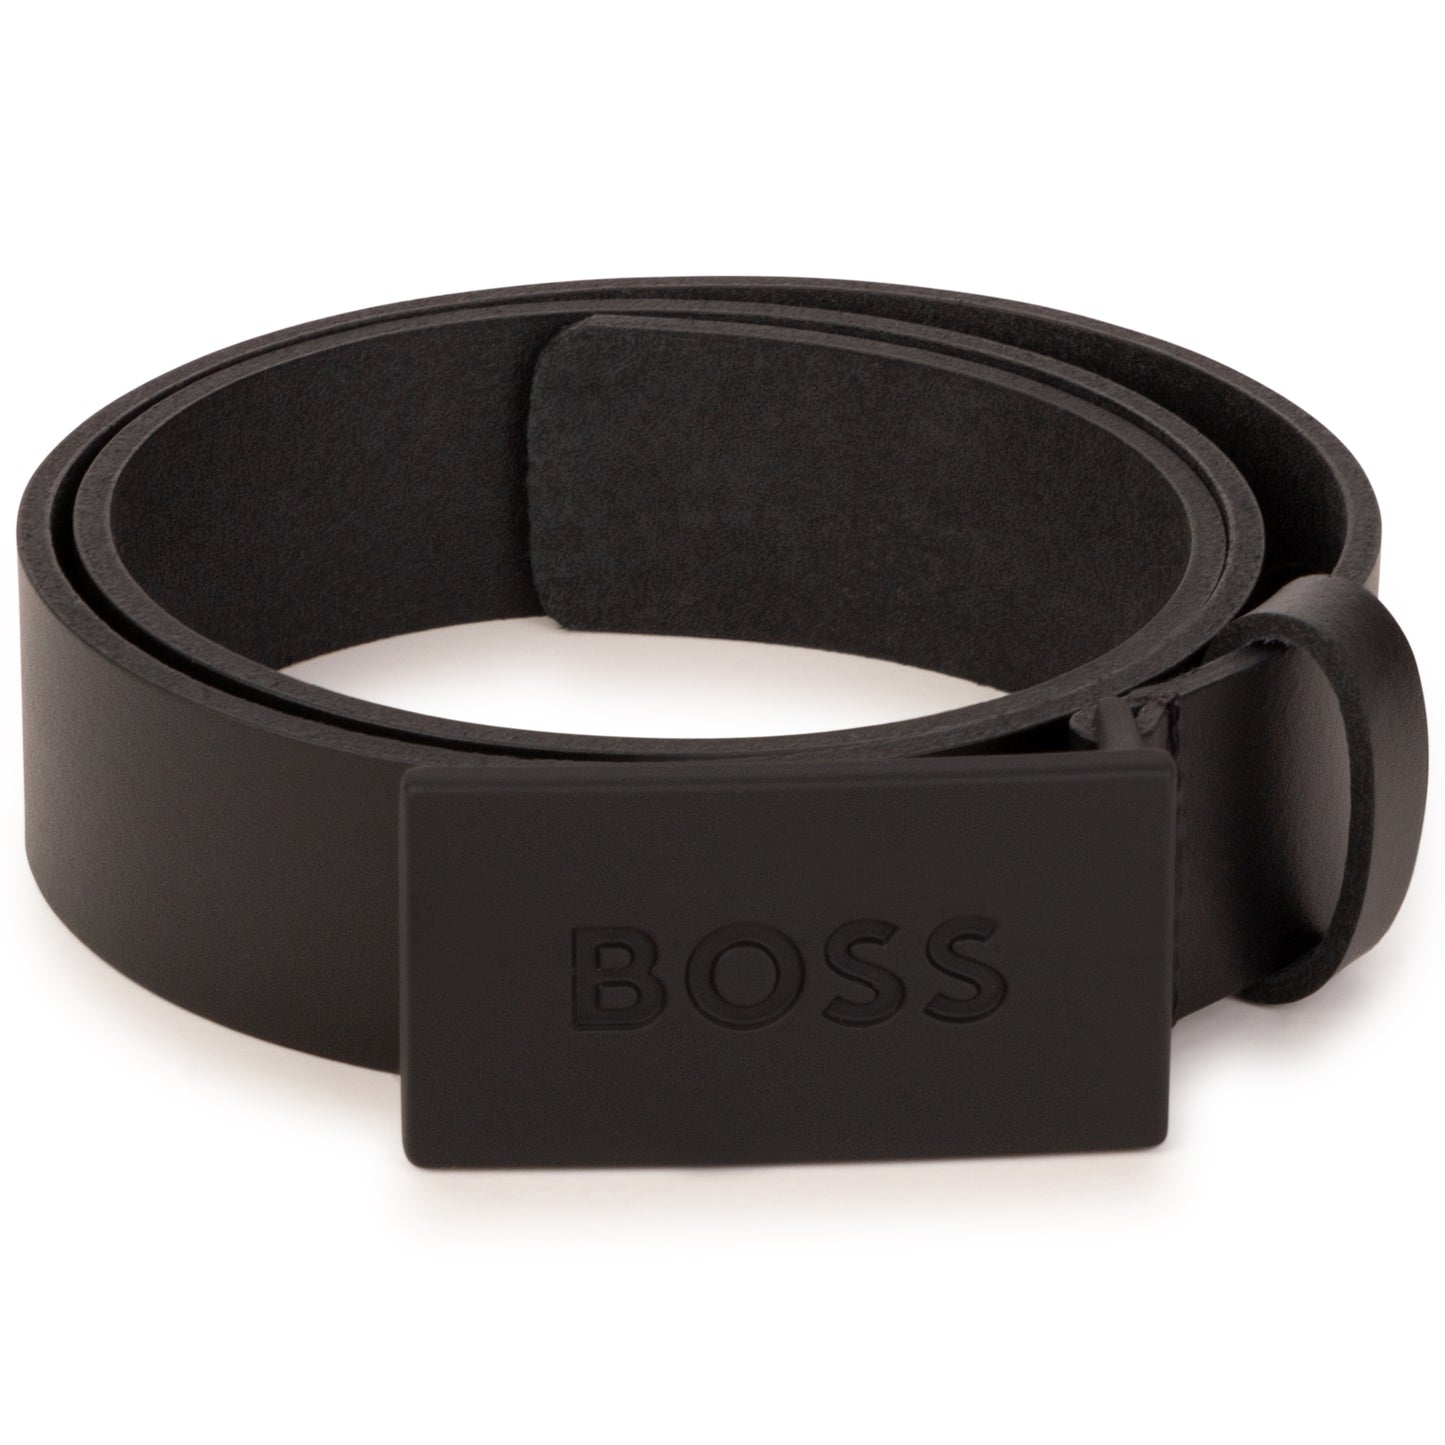 Hugo Boss Boys Leather Belt w/Metal Buckle_ Black J20355-09B